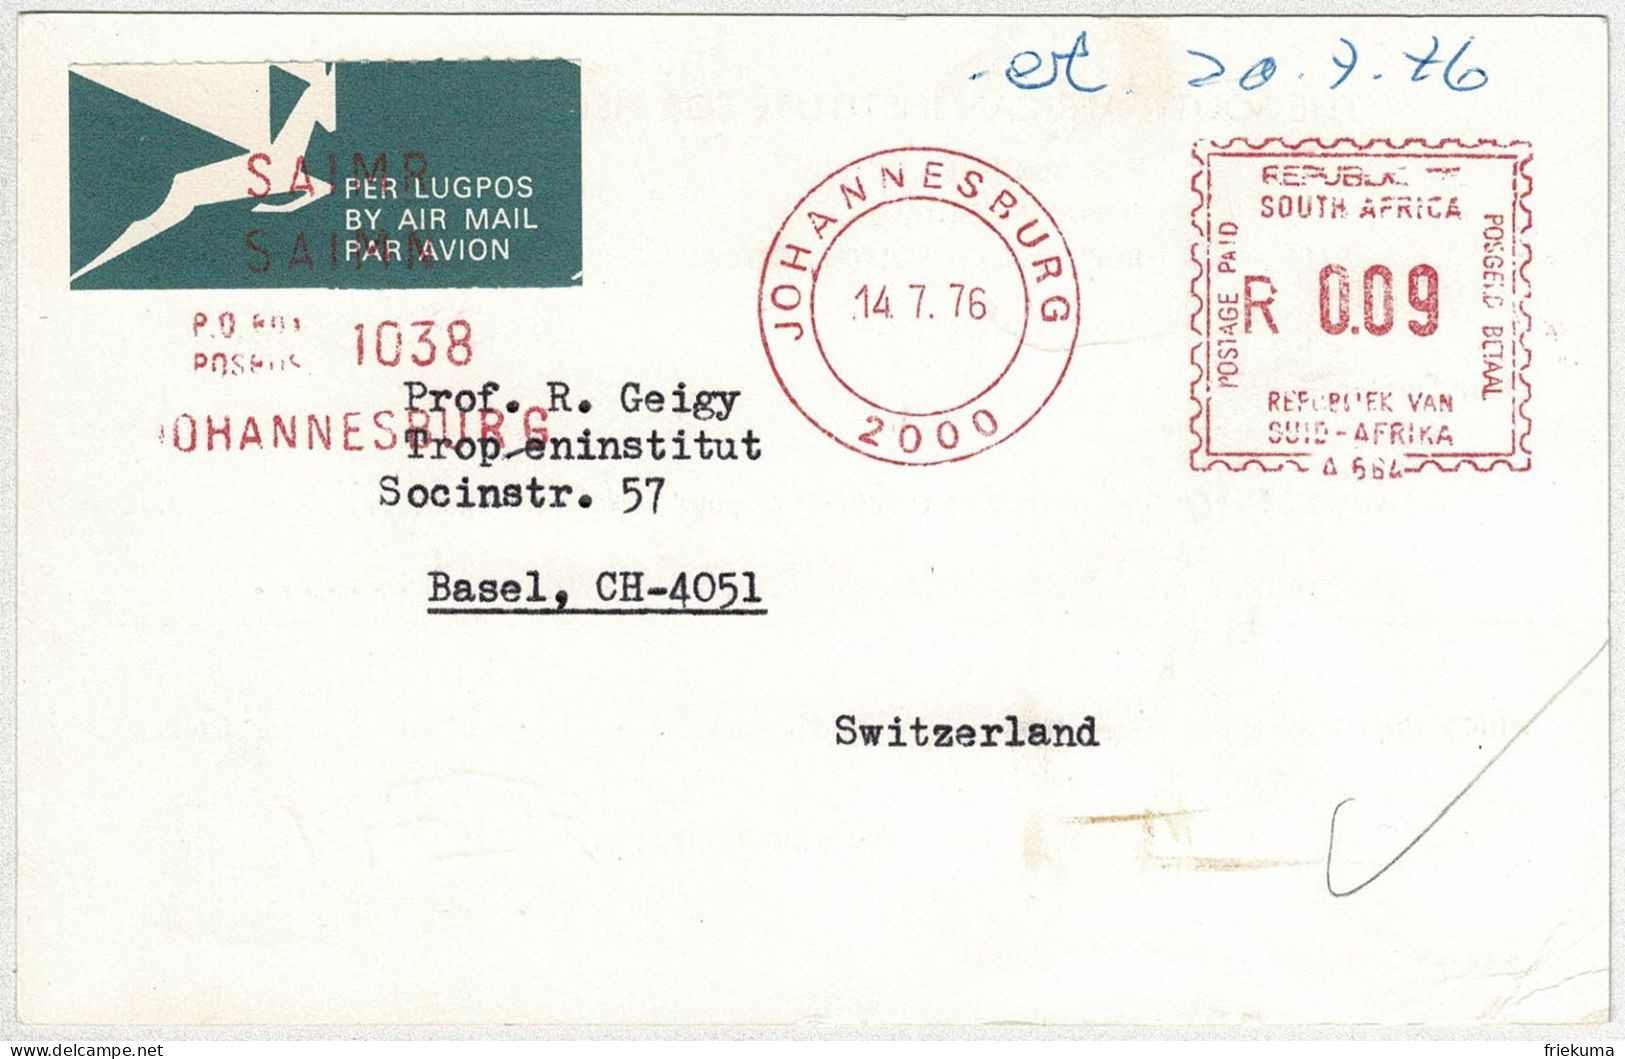 Südafrika / South Africa 1976, Postkarte Luftpost / Air Mail Freistempel / Meterstamp Johannesburg - Basel (Schweiz)  - Covers & Documents